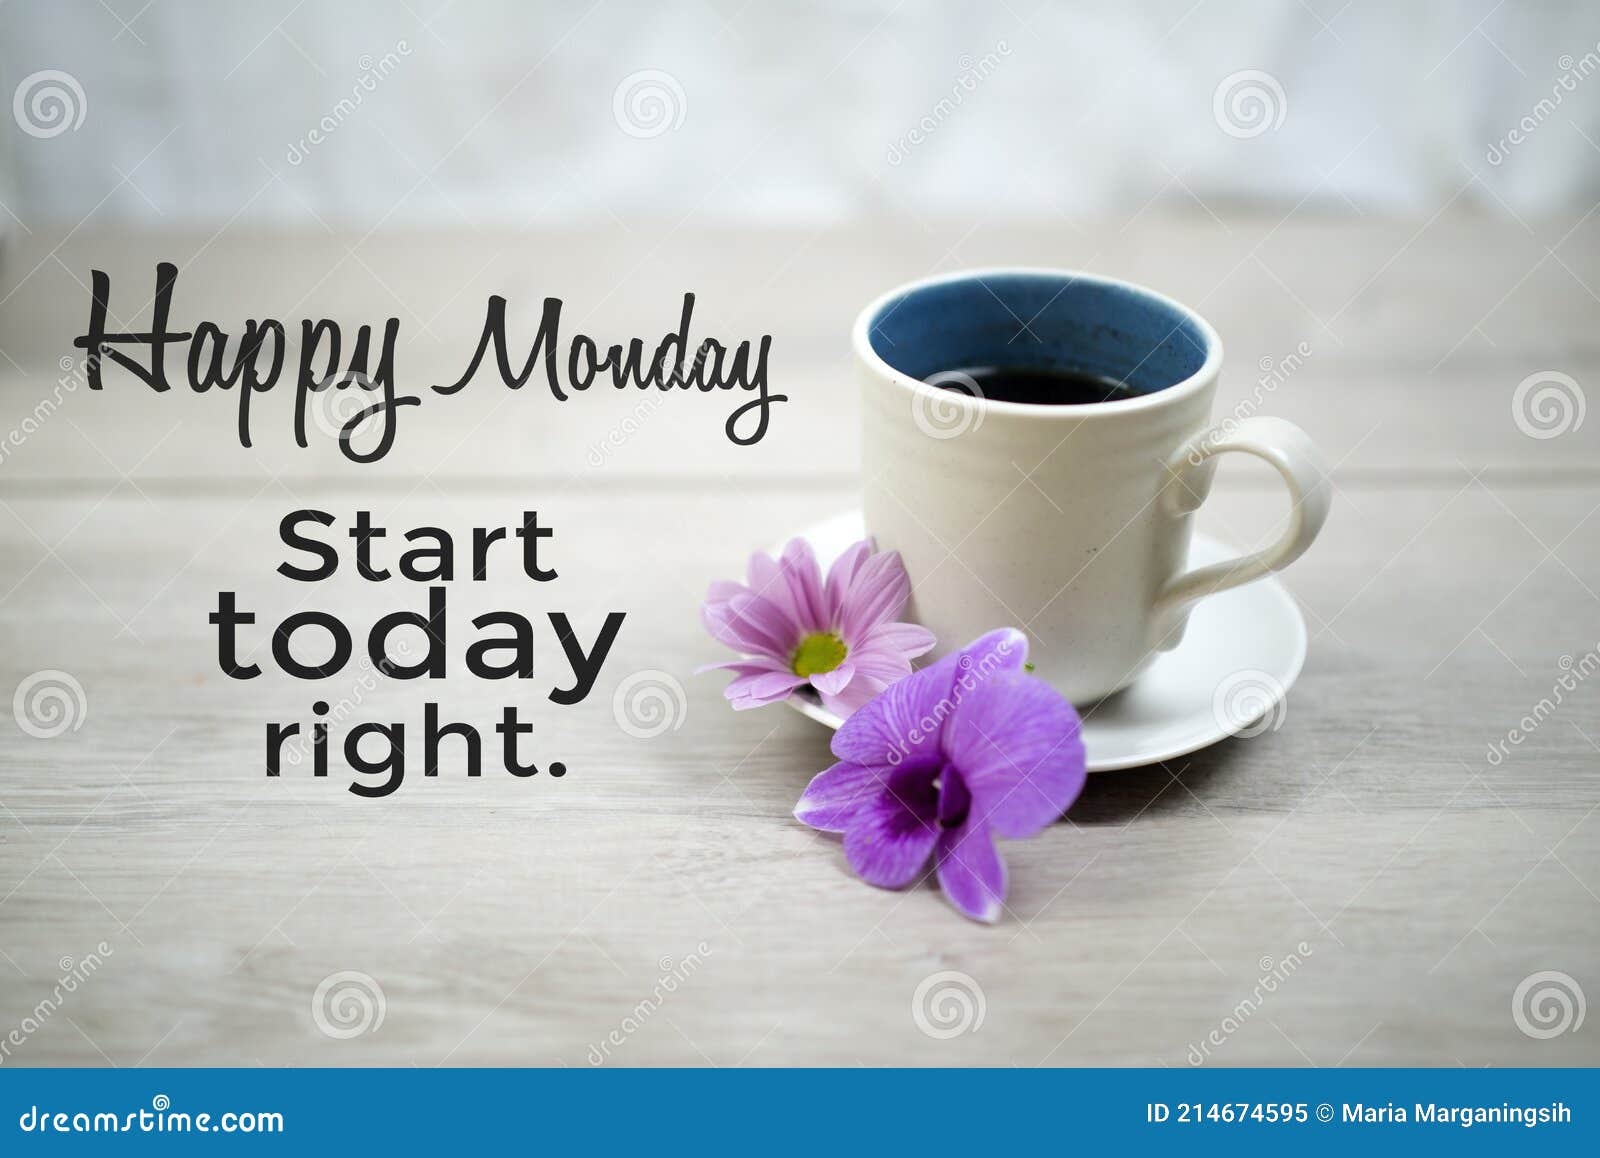 172 Monday Morning Motivational Quotes Stock Photos - Free ...